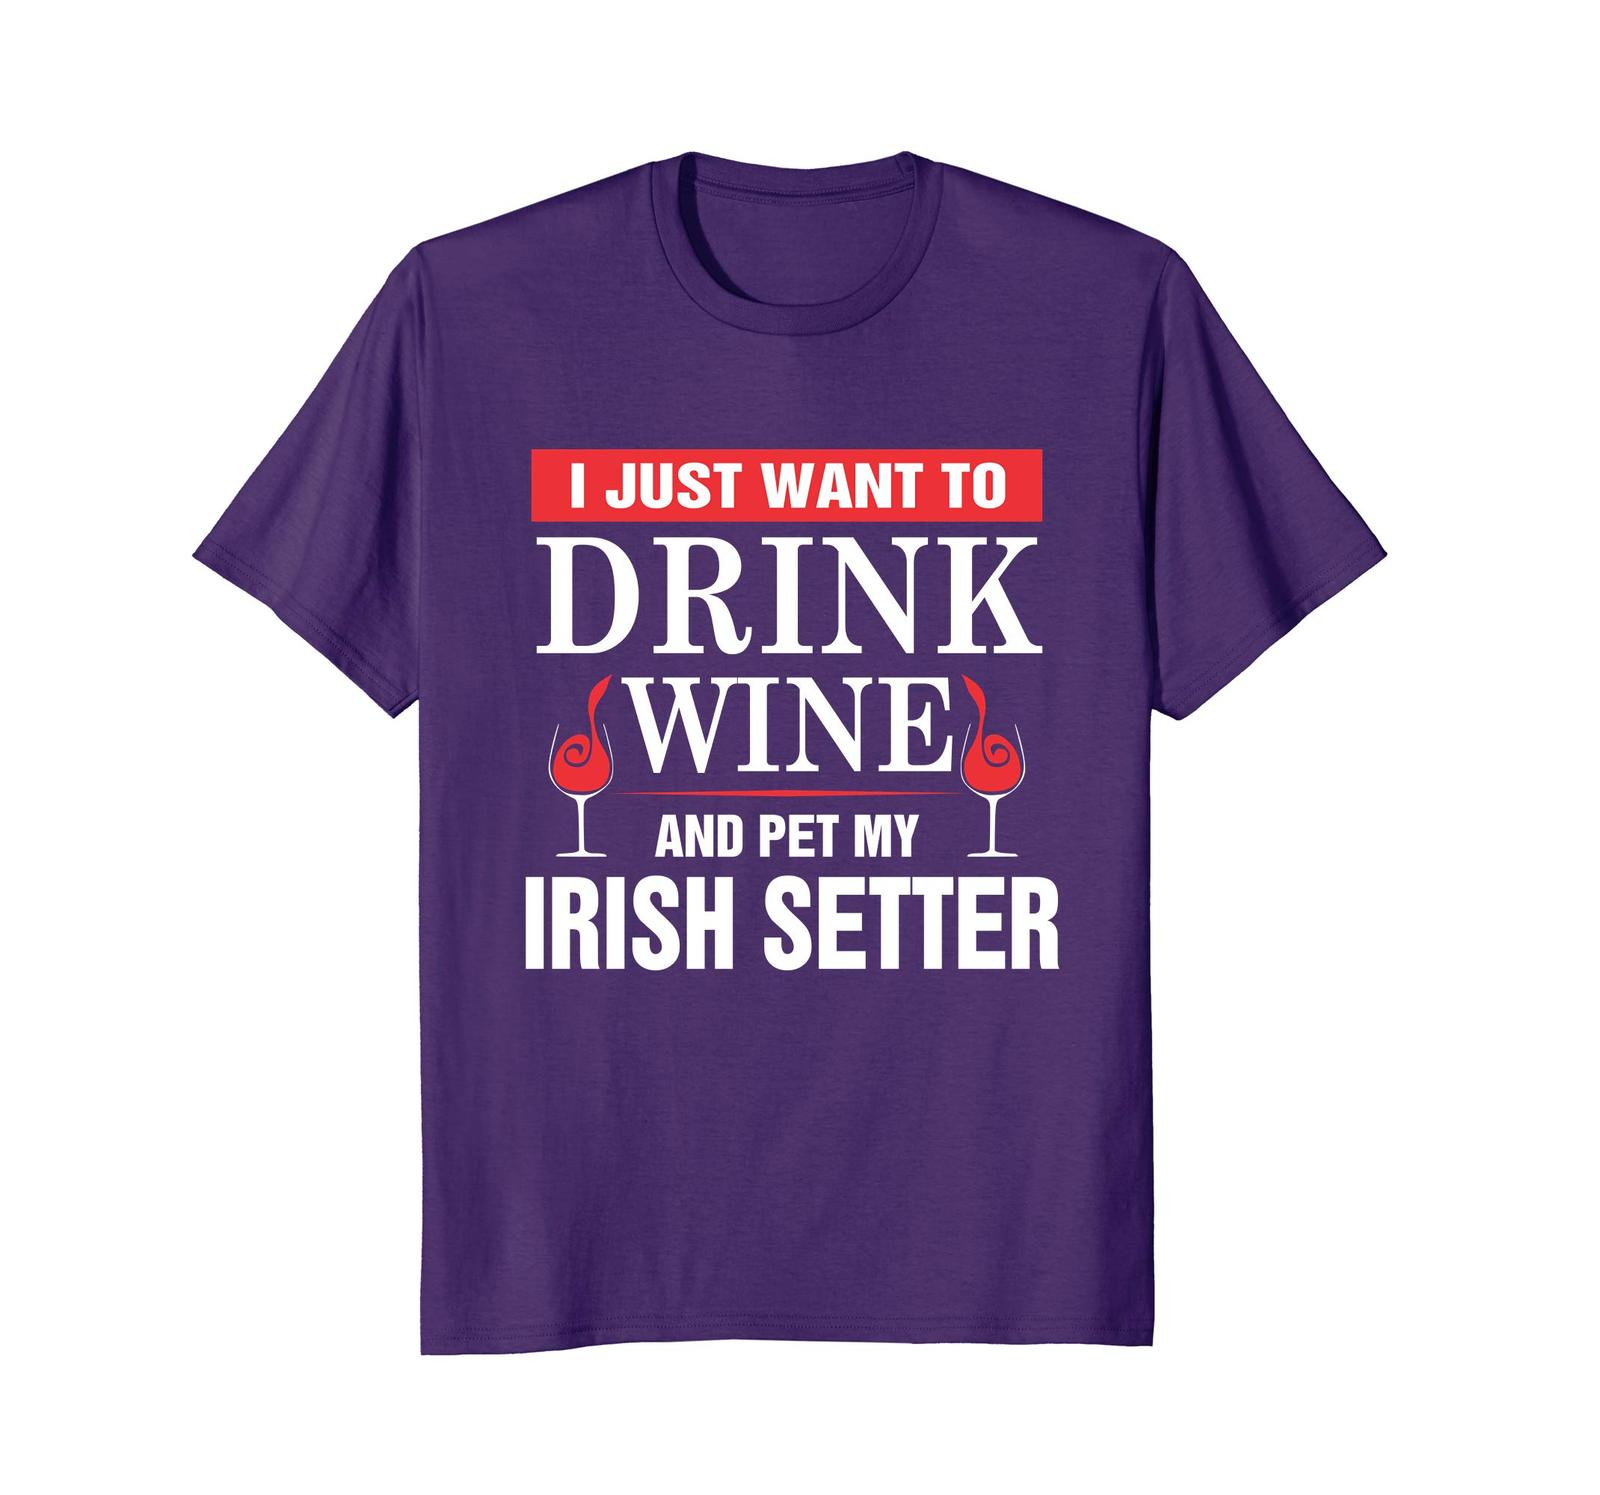 Dog Fashion - I Just Want To Drink Wine And My Irish Setter T-shirt Men